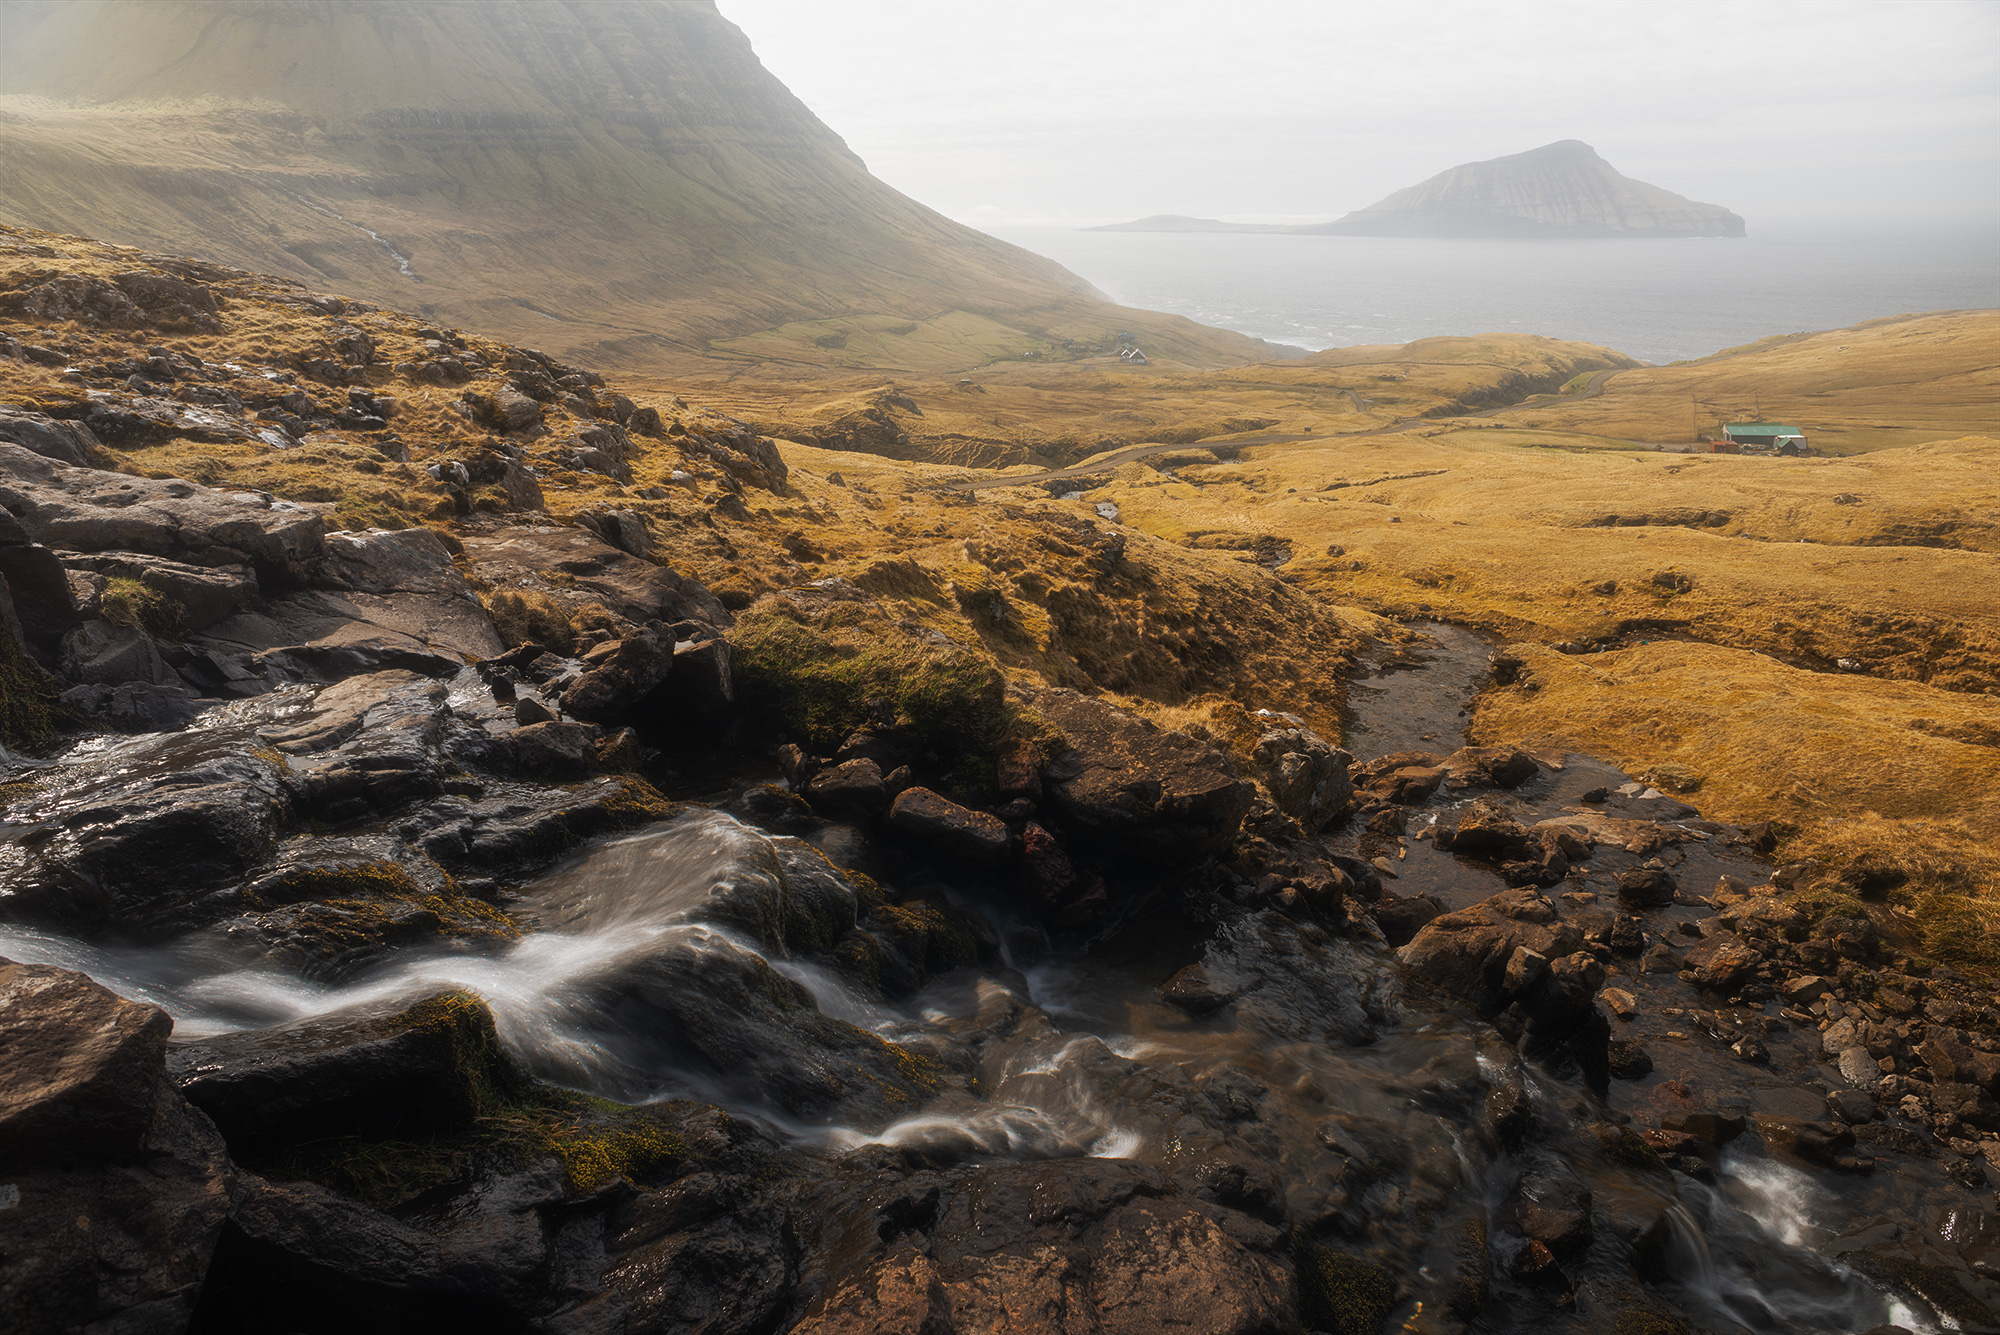 Winding road from the Norðradalsskarð pass to the Faroe Islands.